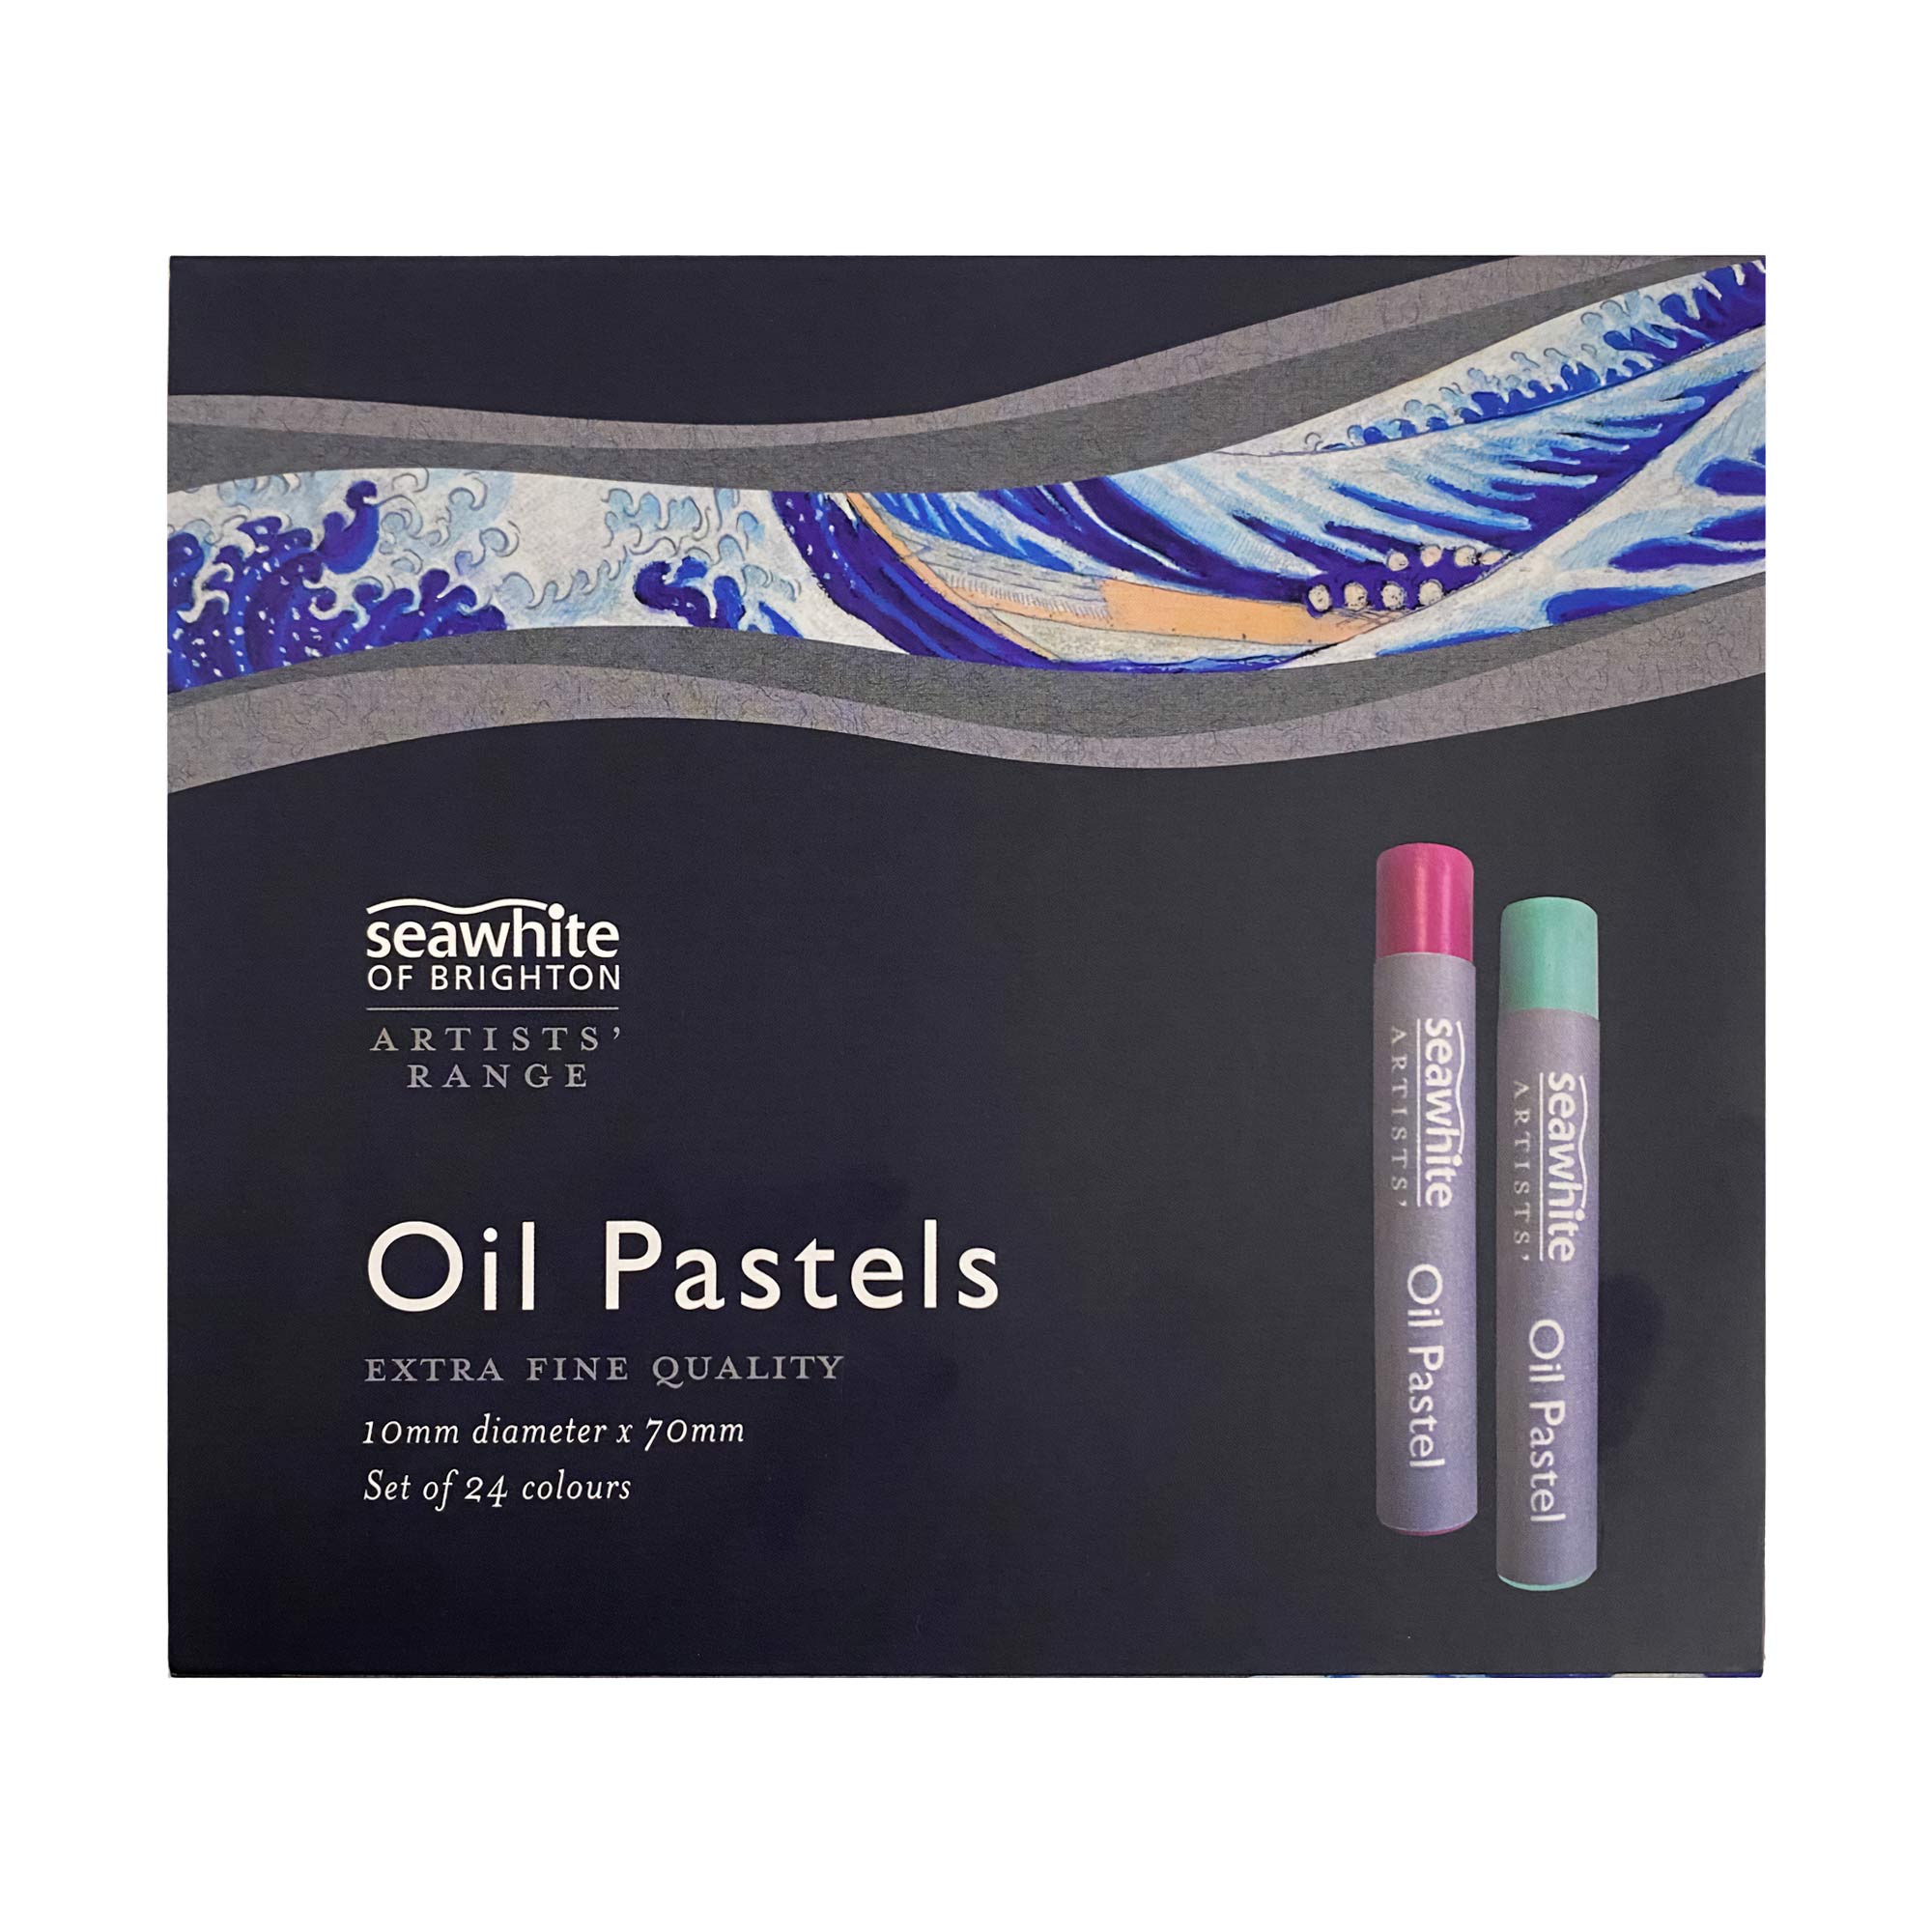 Seawhite Oil Pastels - Artists' Range - Set of 24 Colours - Box